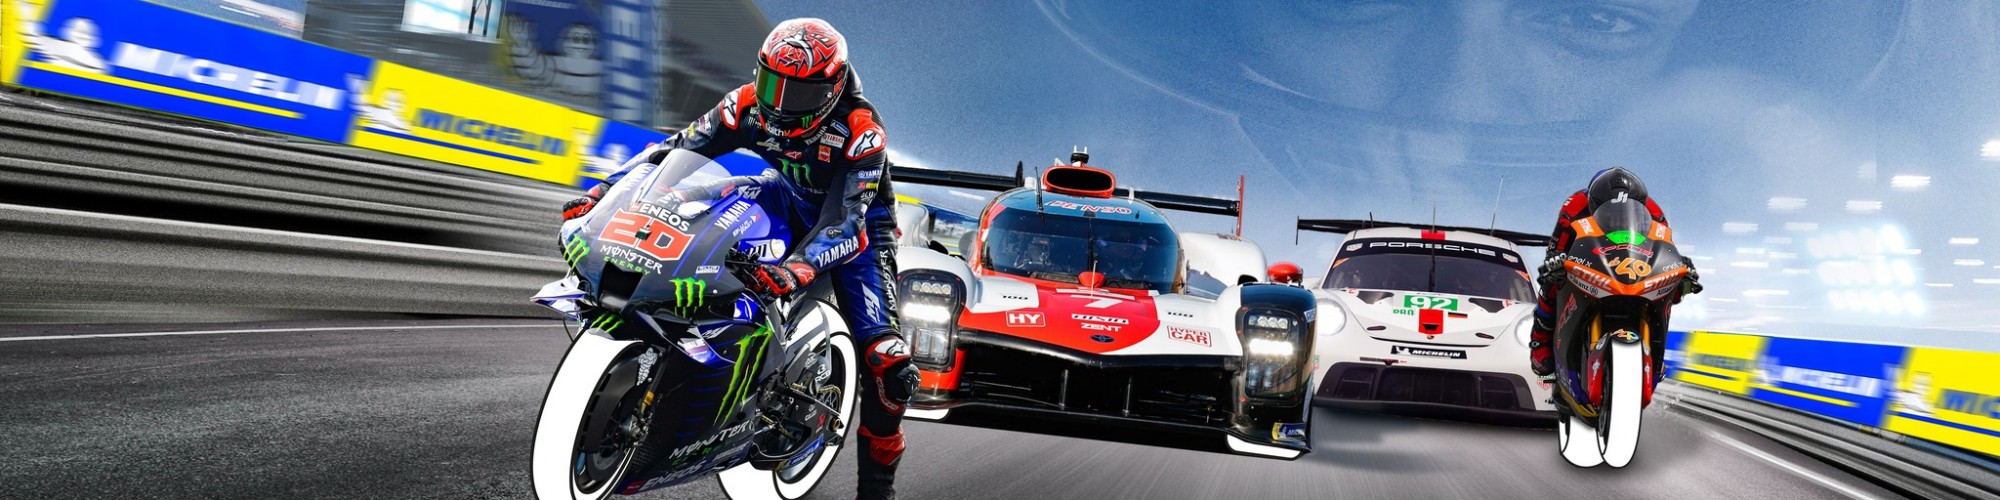 Michelin Motorsport cover image